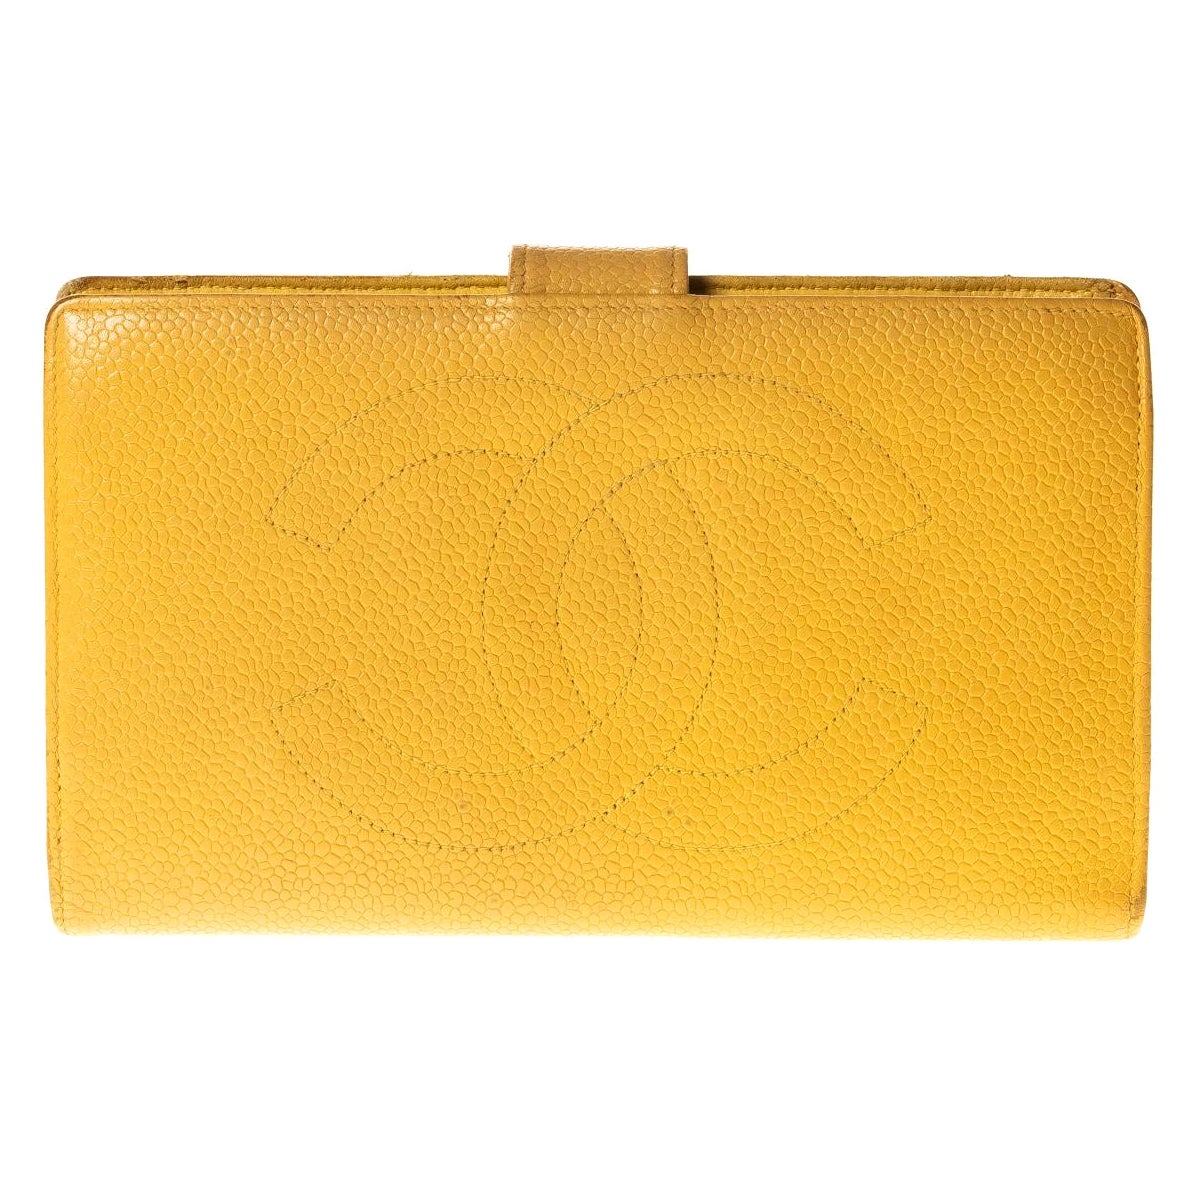 Chanel Caviar CC Mustard Yellow Compact Snap Wallet 1997